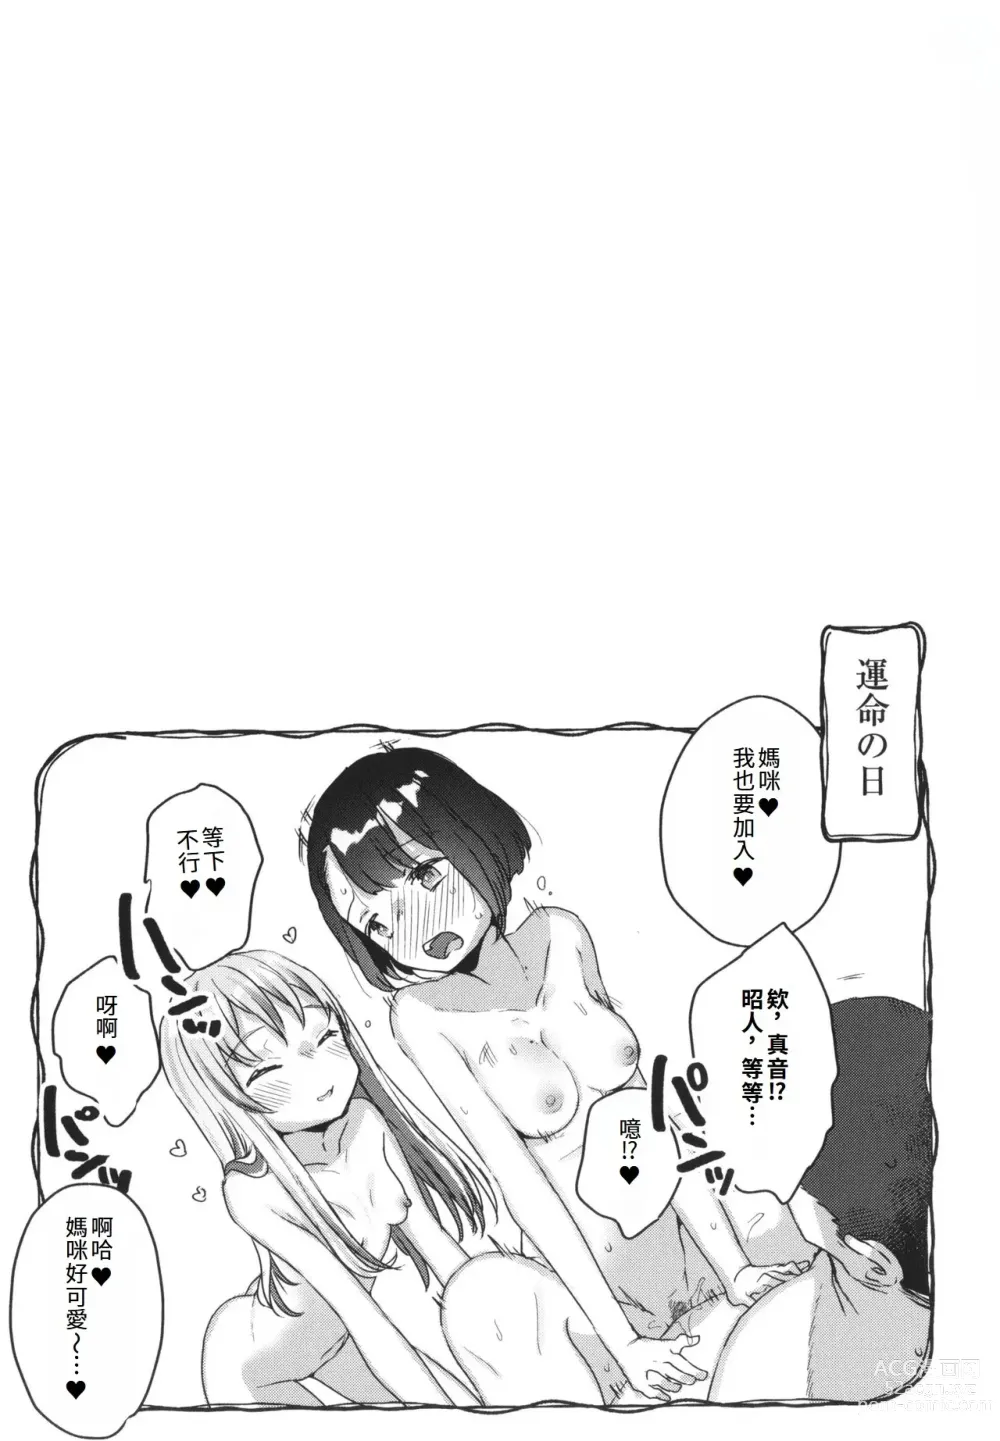 Page 23 of manga 催眠治療太有效了